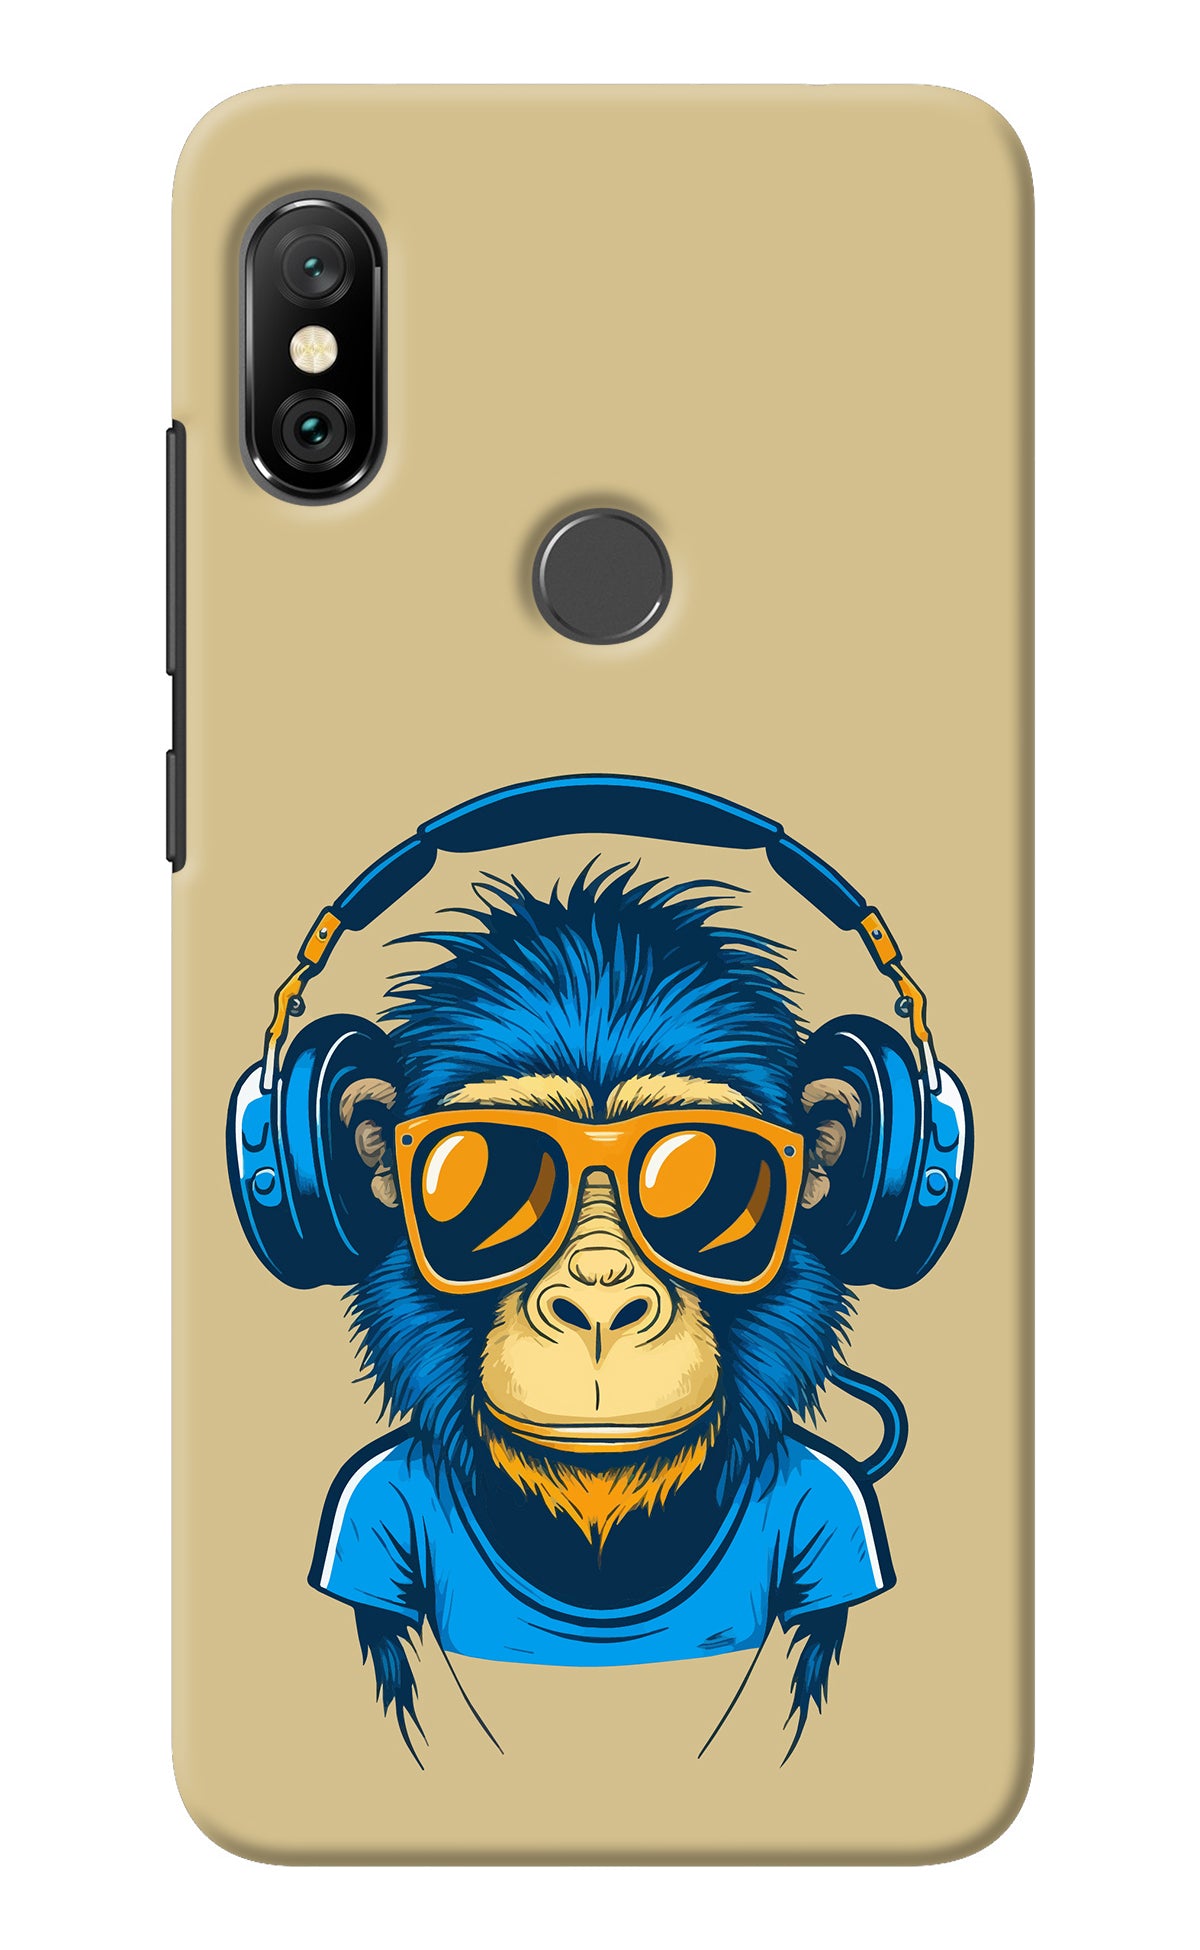 Monkey Headphone Redmi Note 6 Pro Back Cover